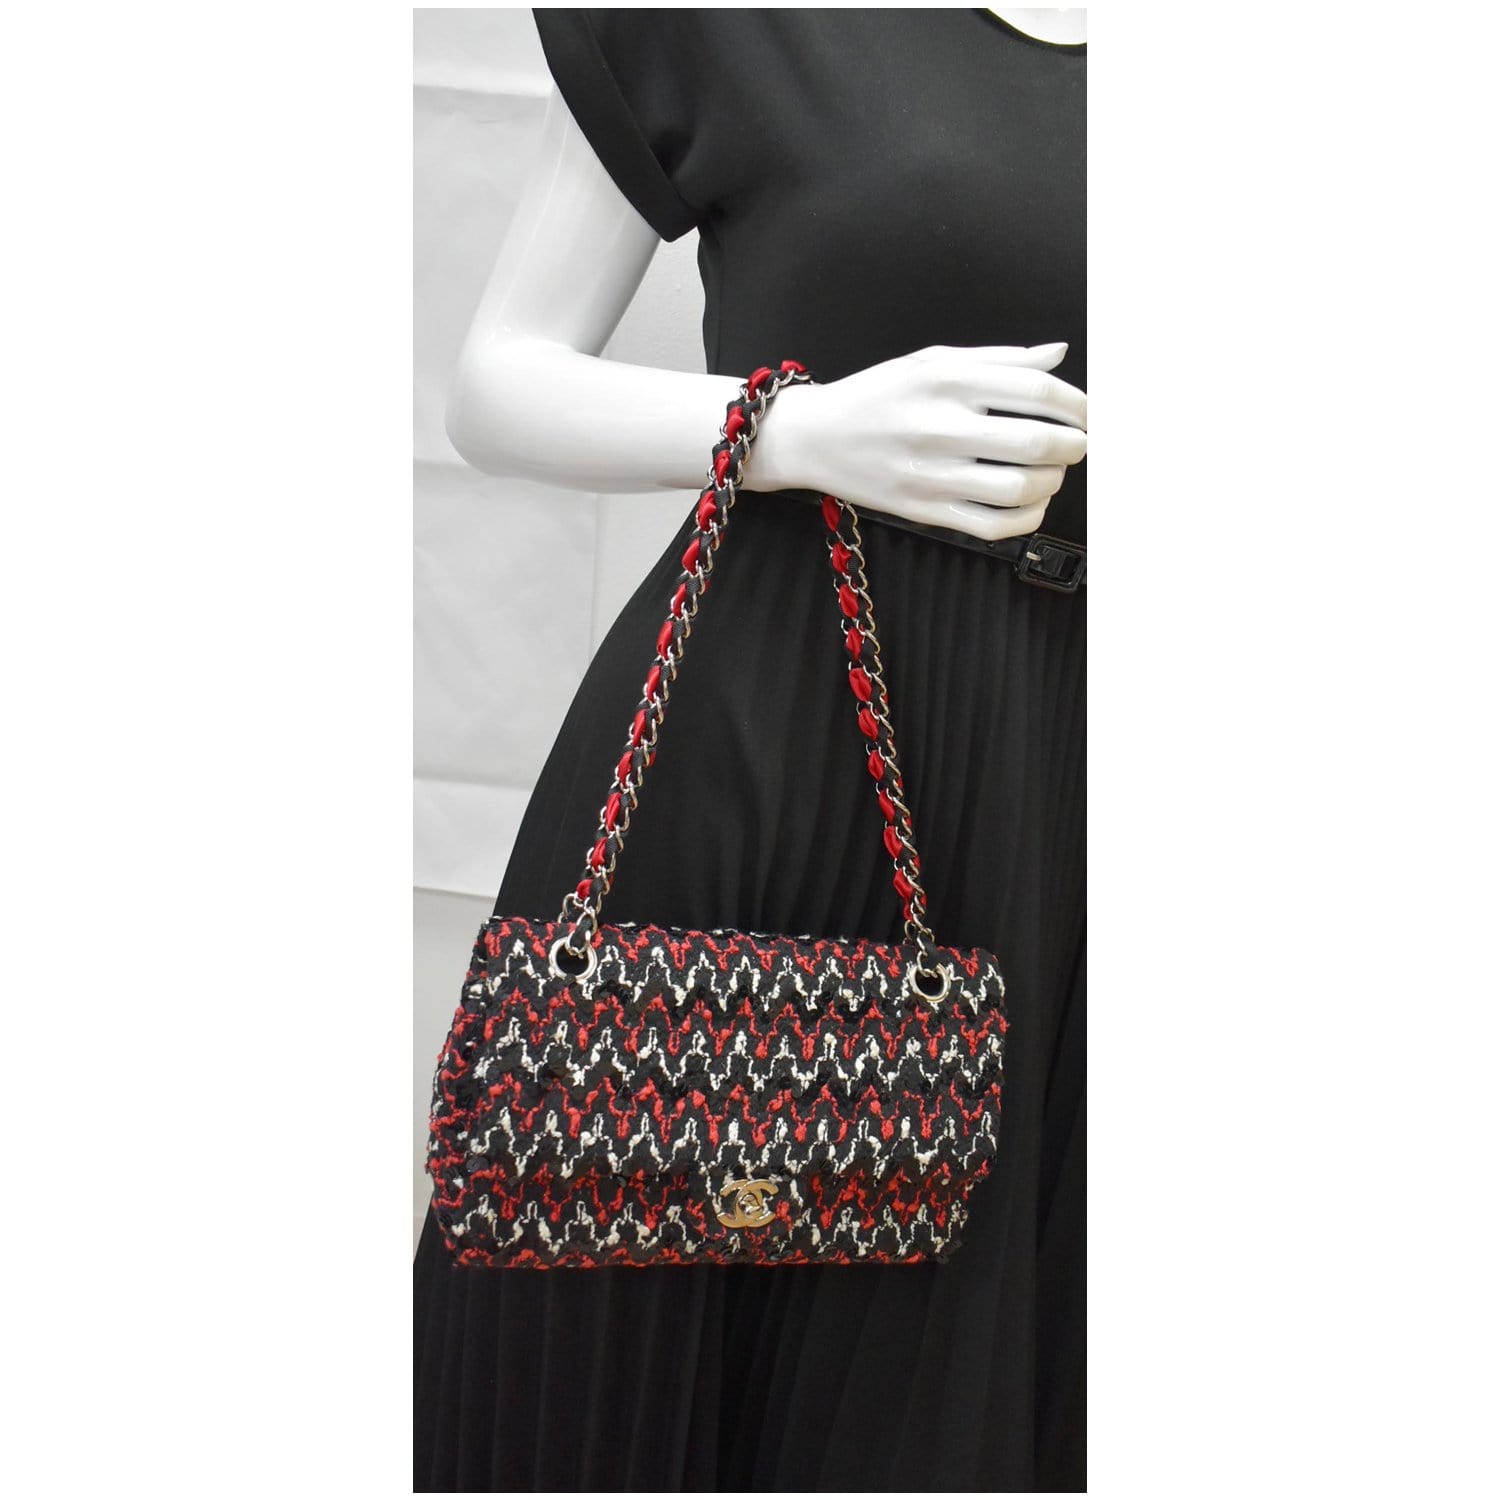 Chanel 19 Tweed Bag  Chanel handbags classic, Tweed bag, Bags